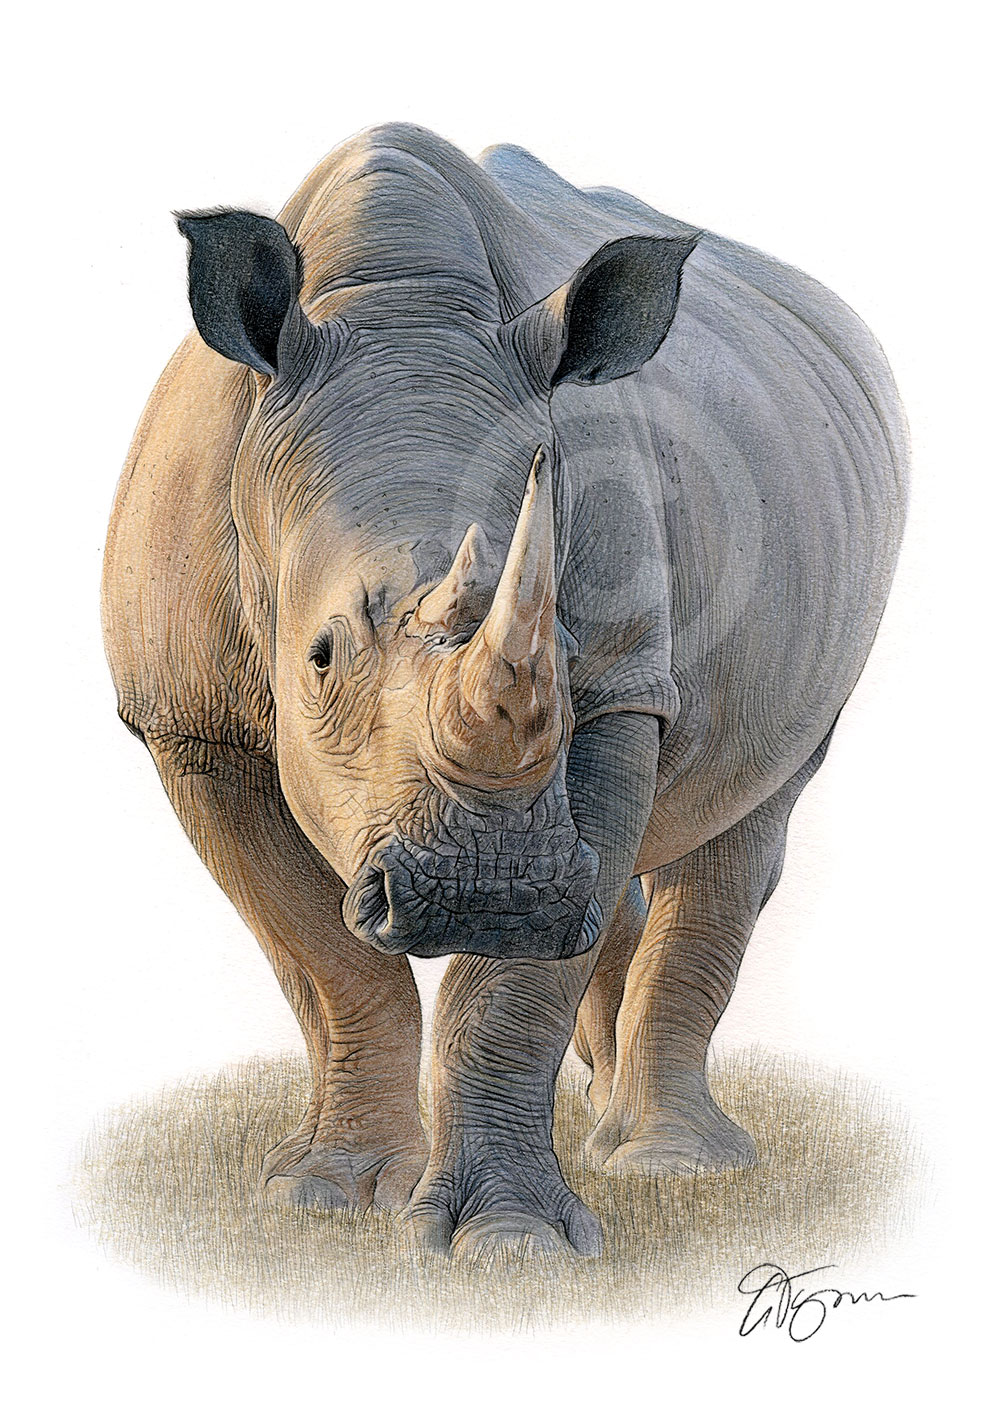 Colour pencil drawing of a rhino by artist Gary Tymon